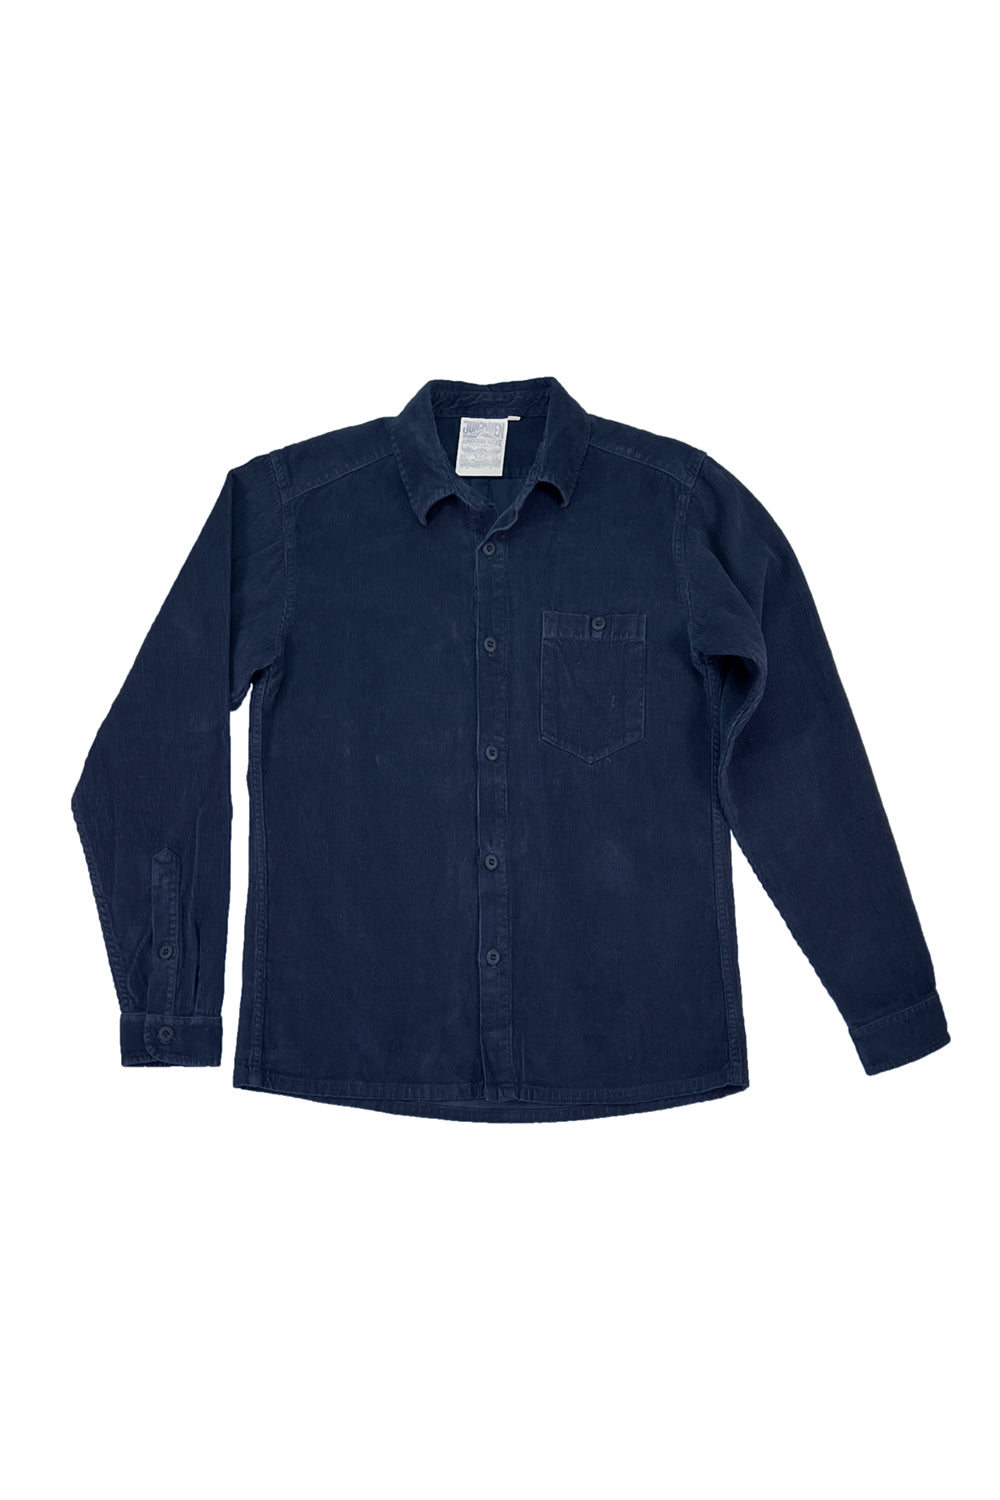 Ventura Shirt | Jungmaven Hemp Clothing & Accessories / Color: Navy